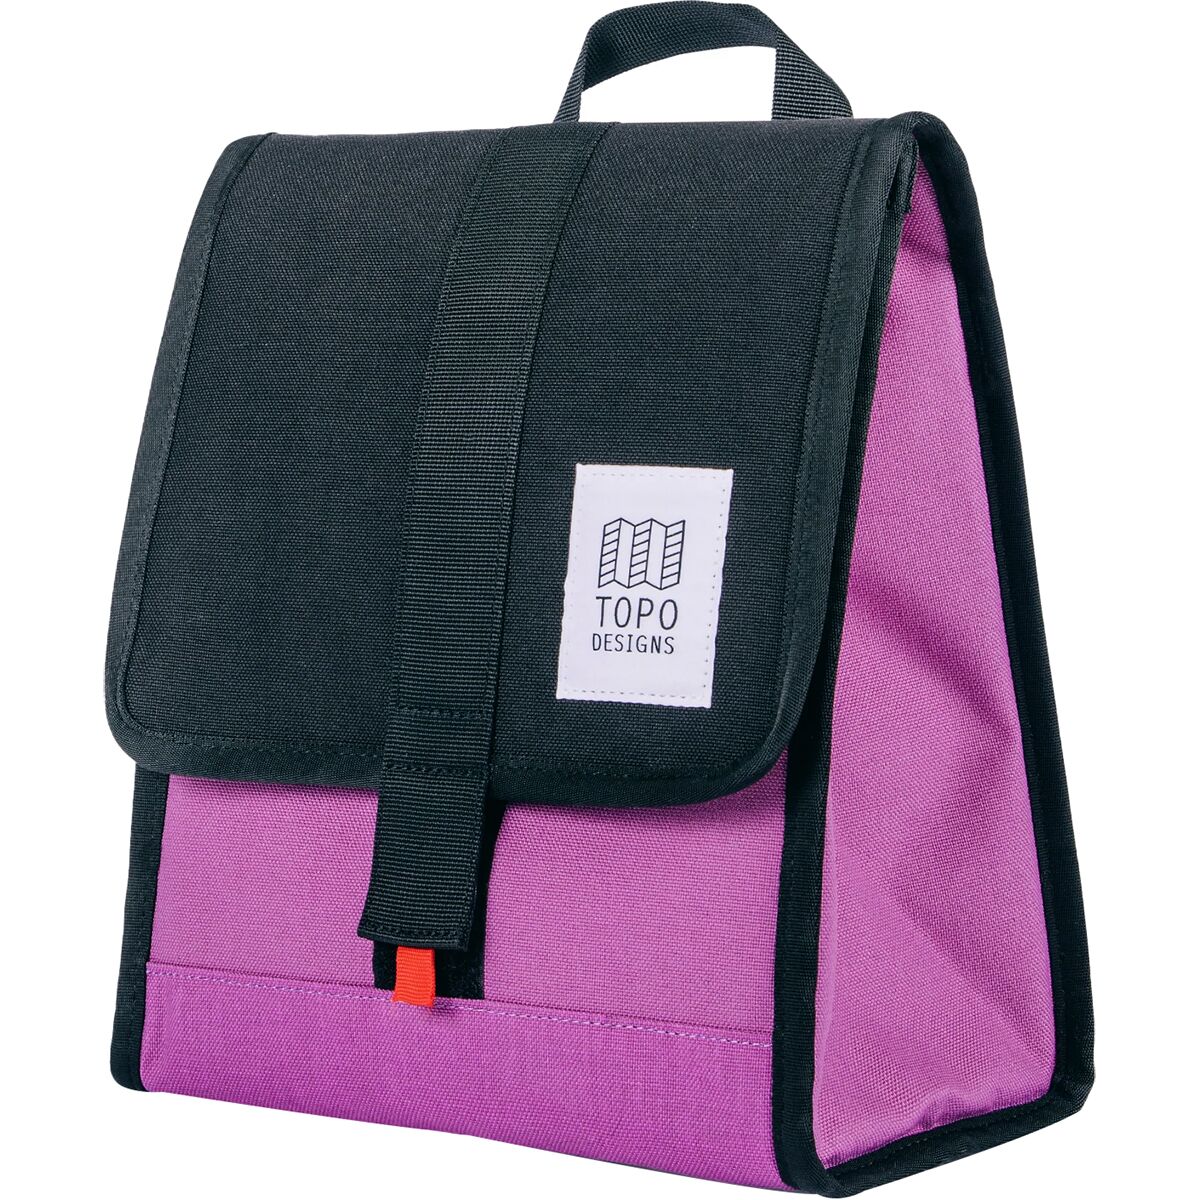  Topo Designs Cooler Bag - Hike & Camp